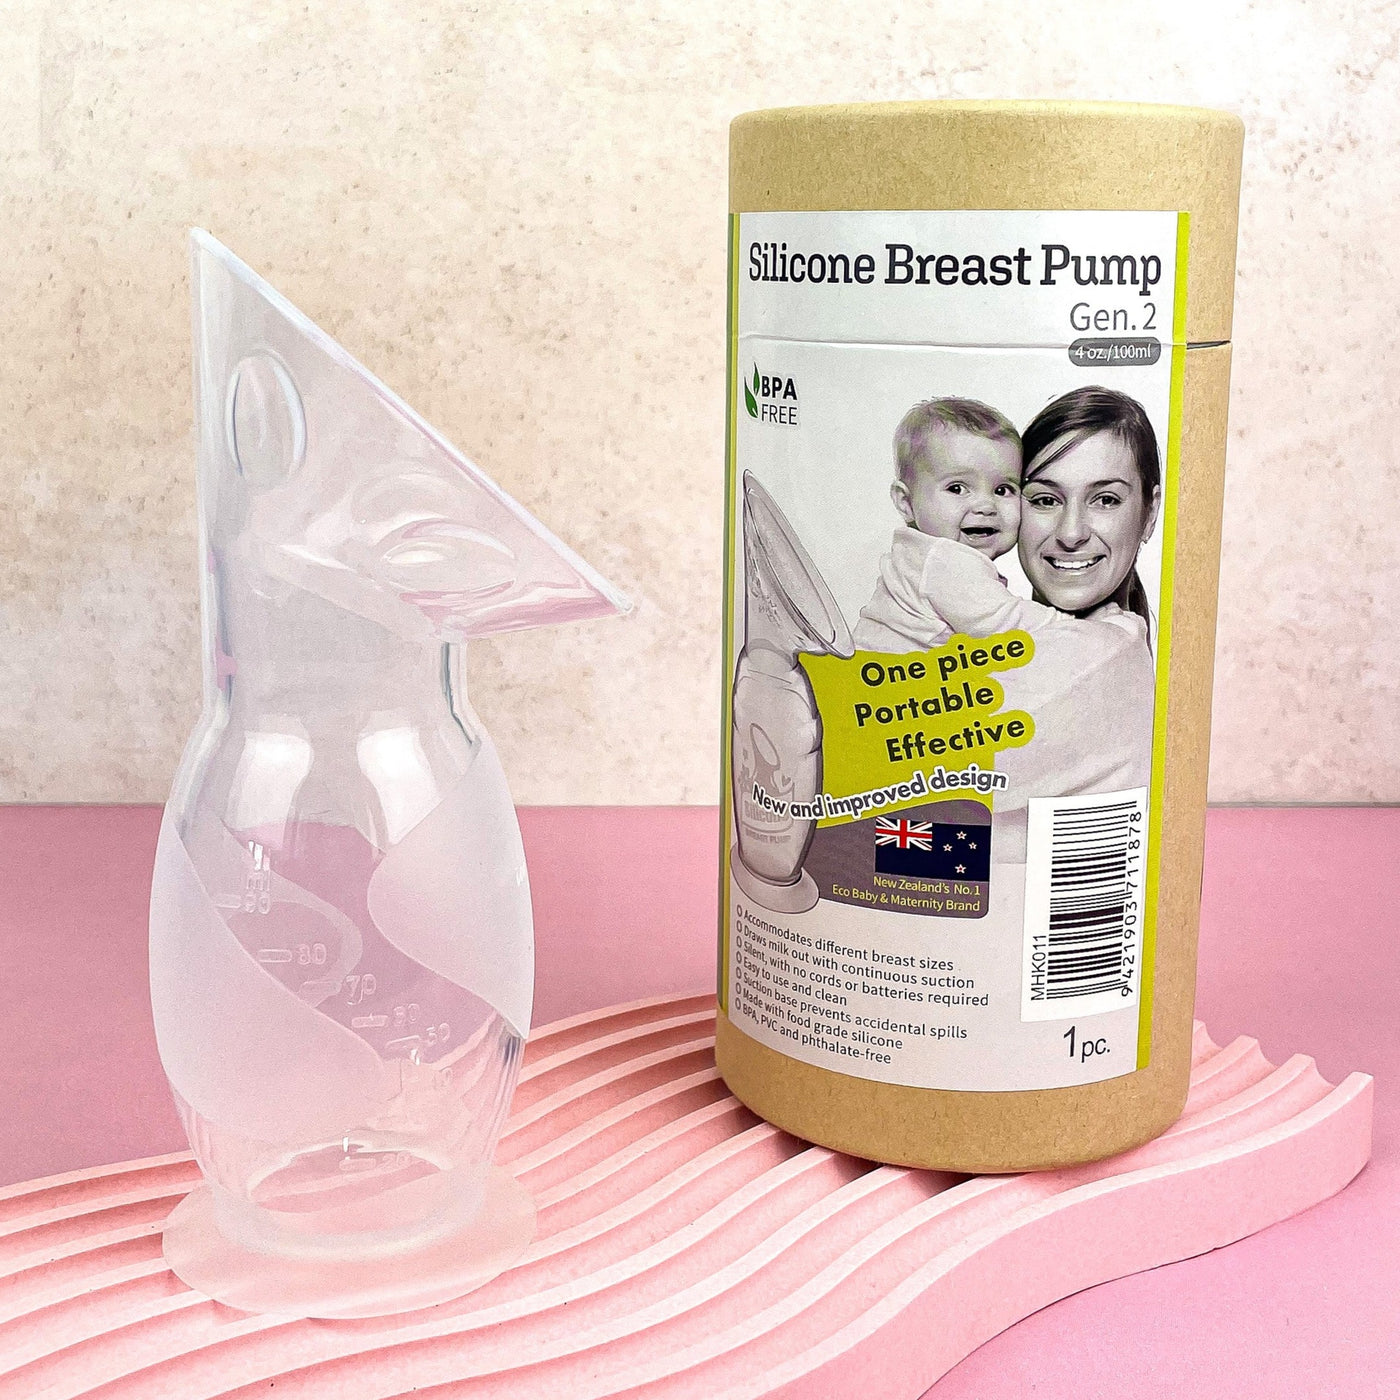 Haakaa Silicone Breast Pump - 100ml